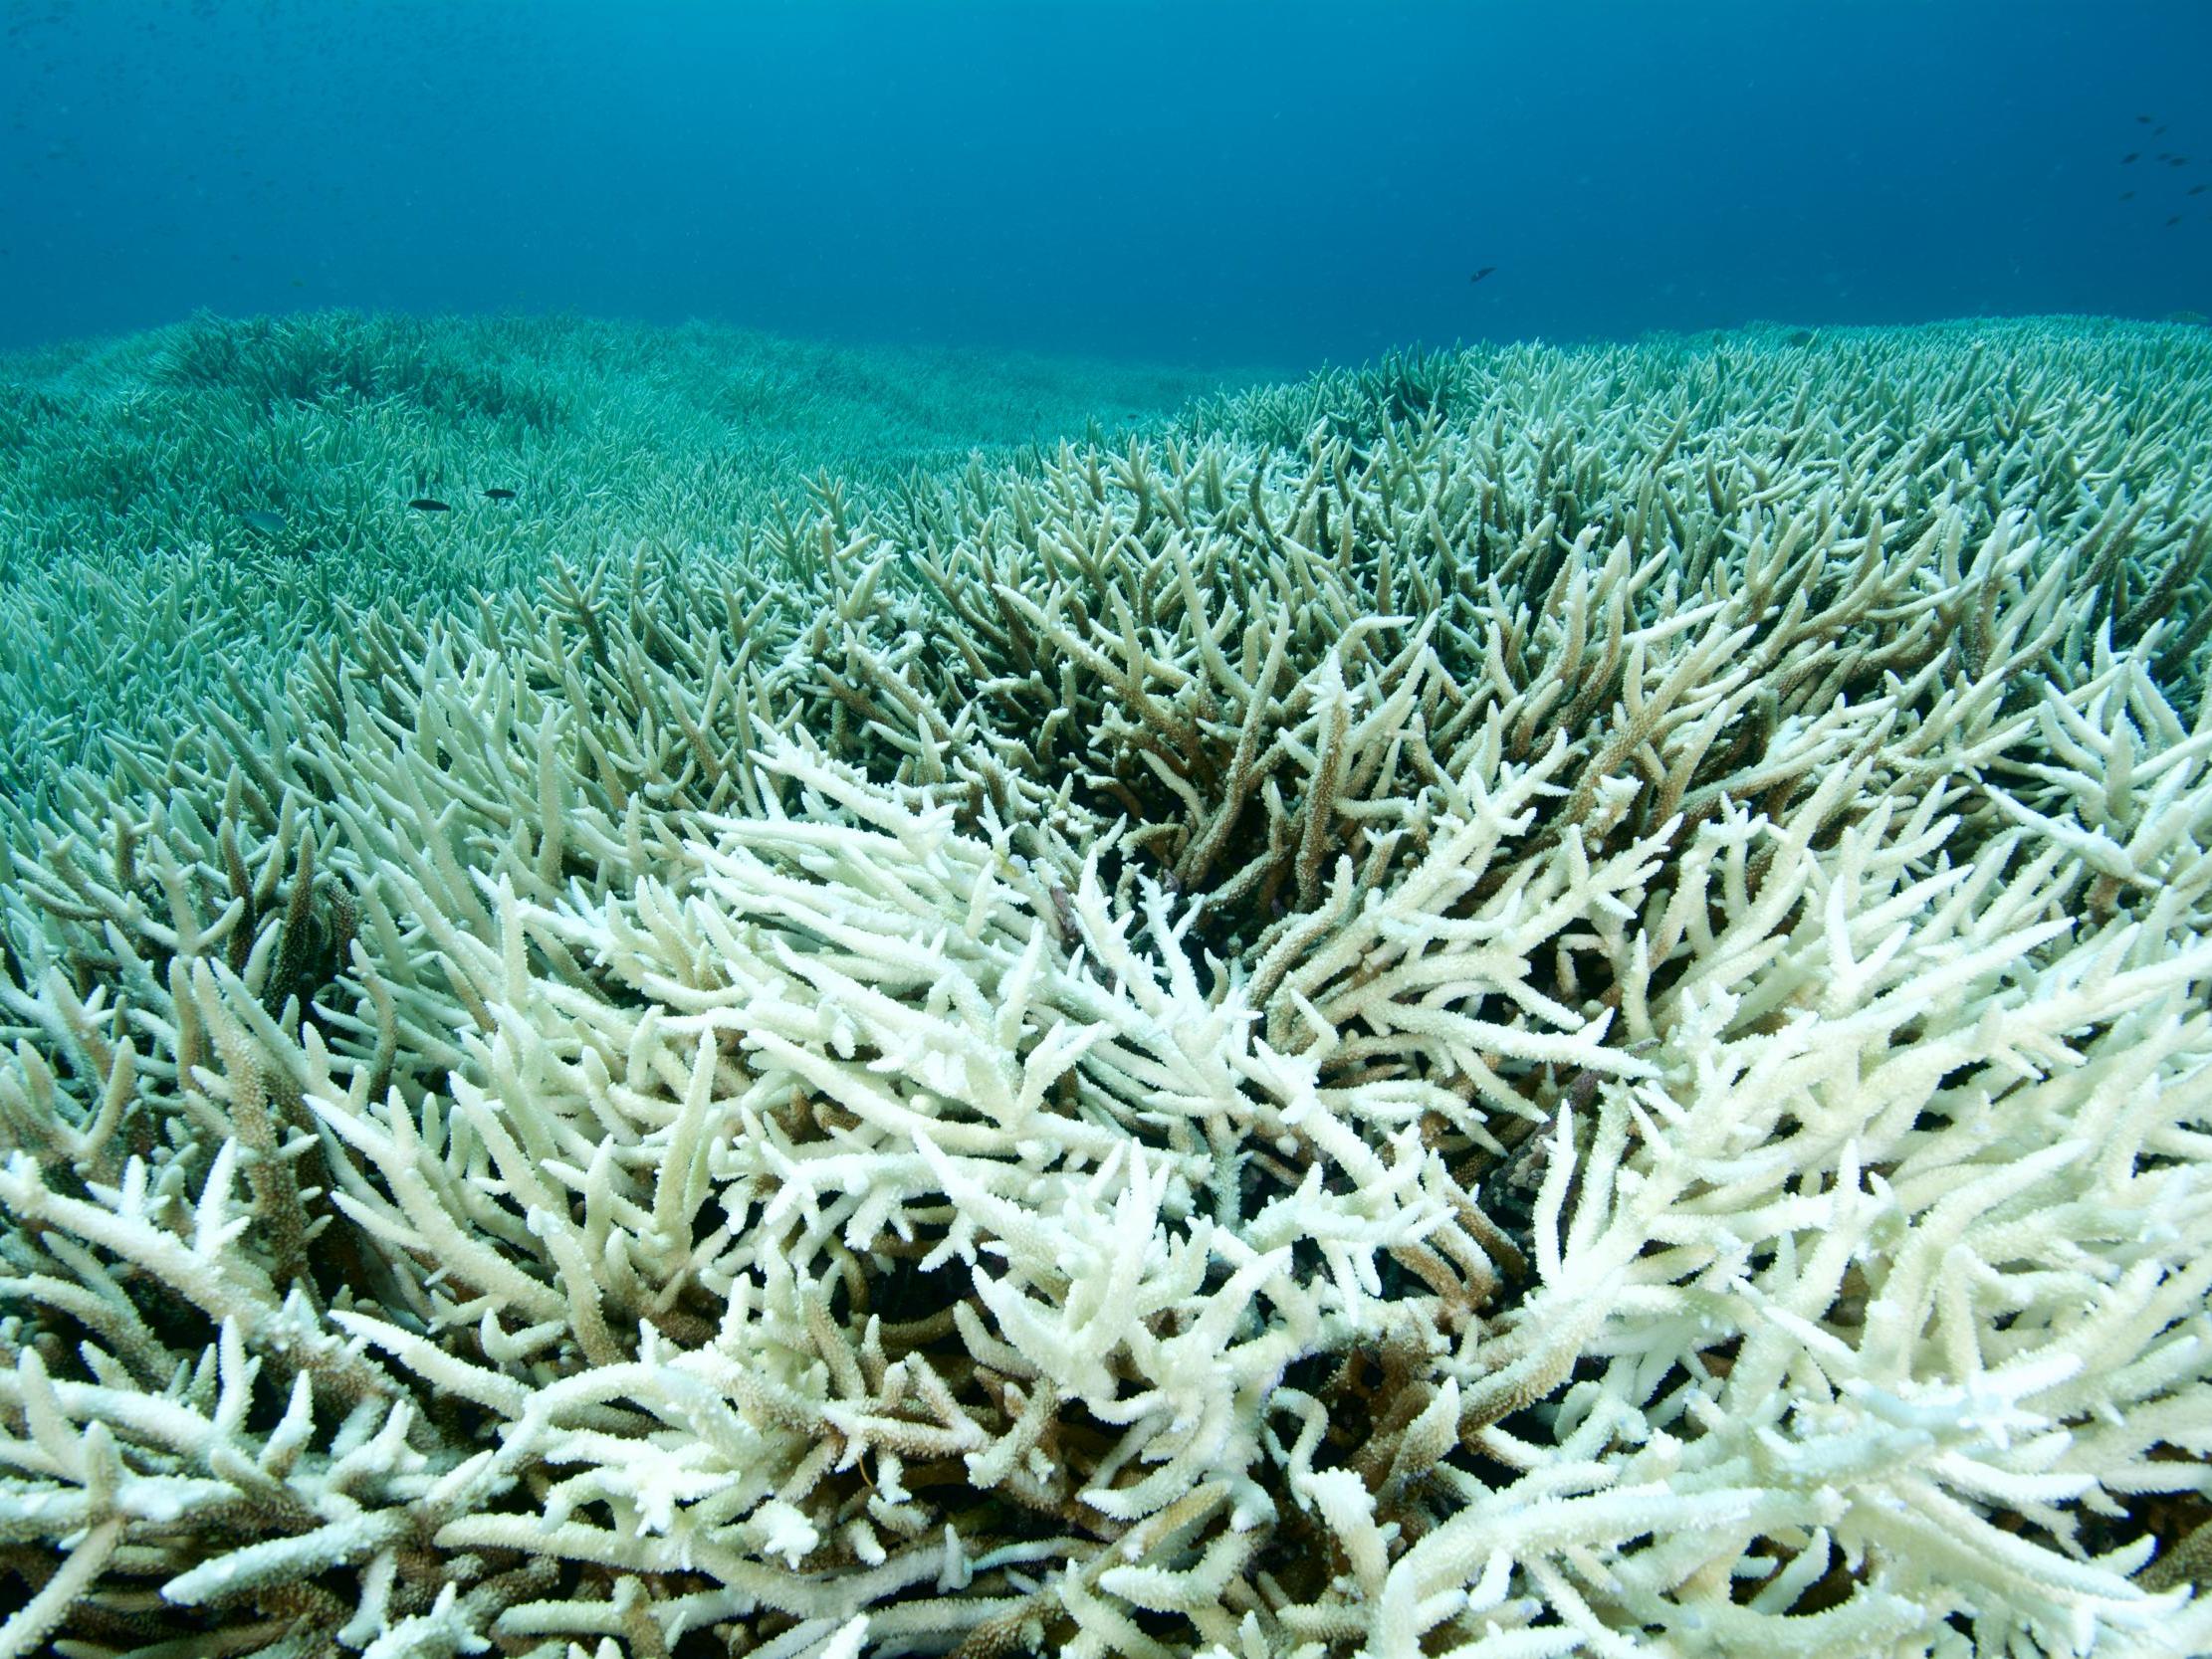 Australia's Great Barrier Reef is suffering mass coral bleaching : NPR